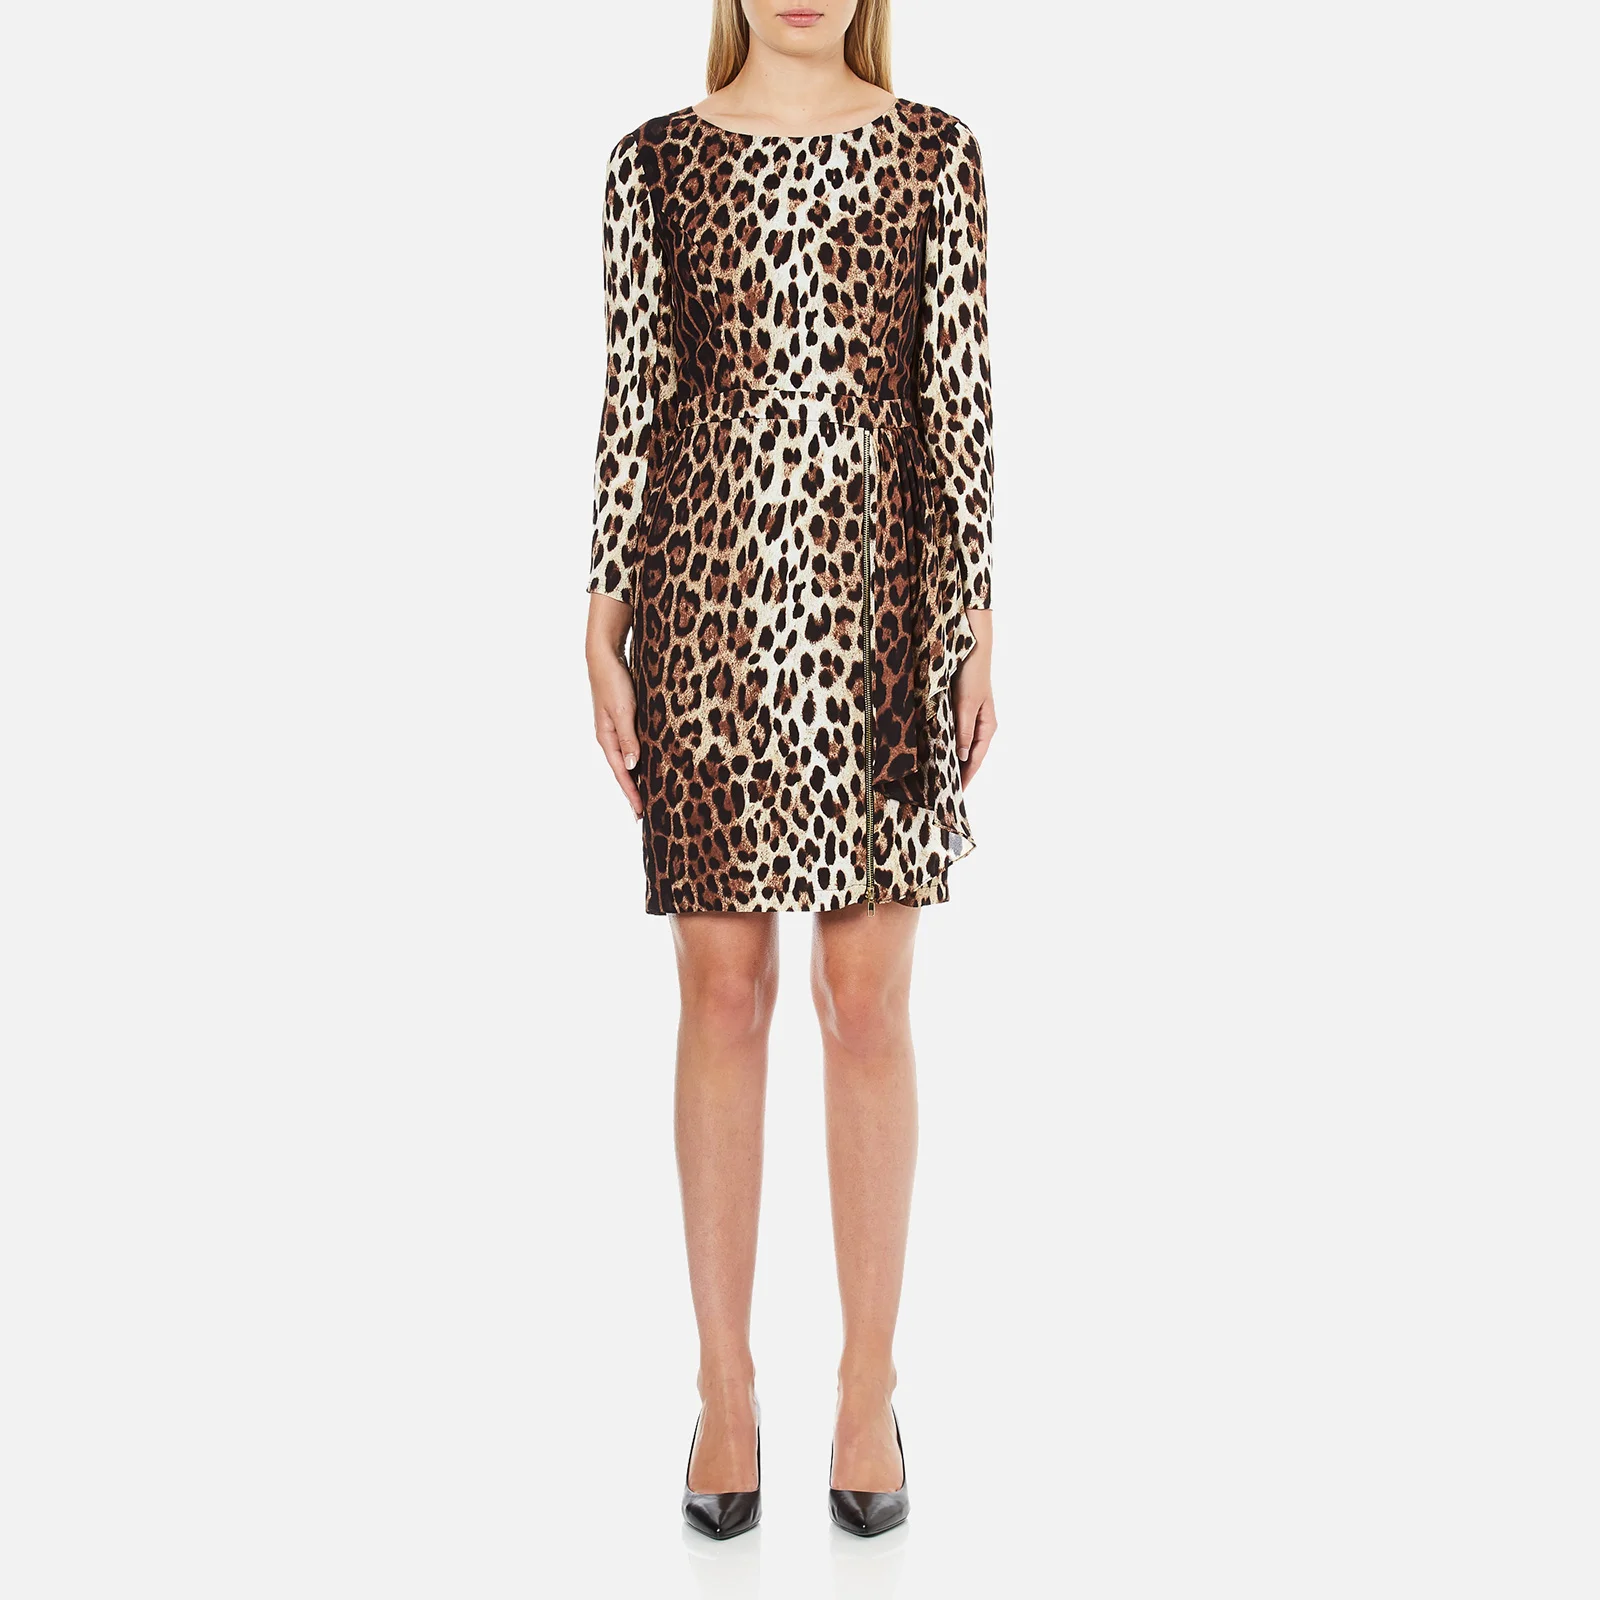 Boutique Moschino Women's Zip Pleat Dress - Leopard Image 1